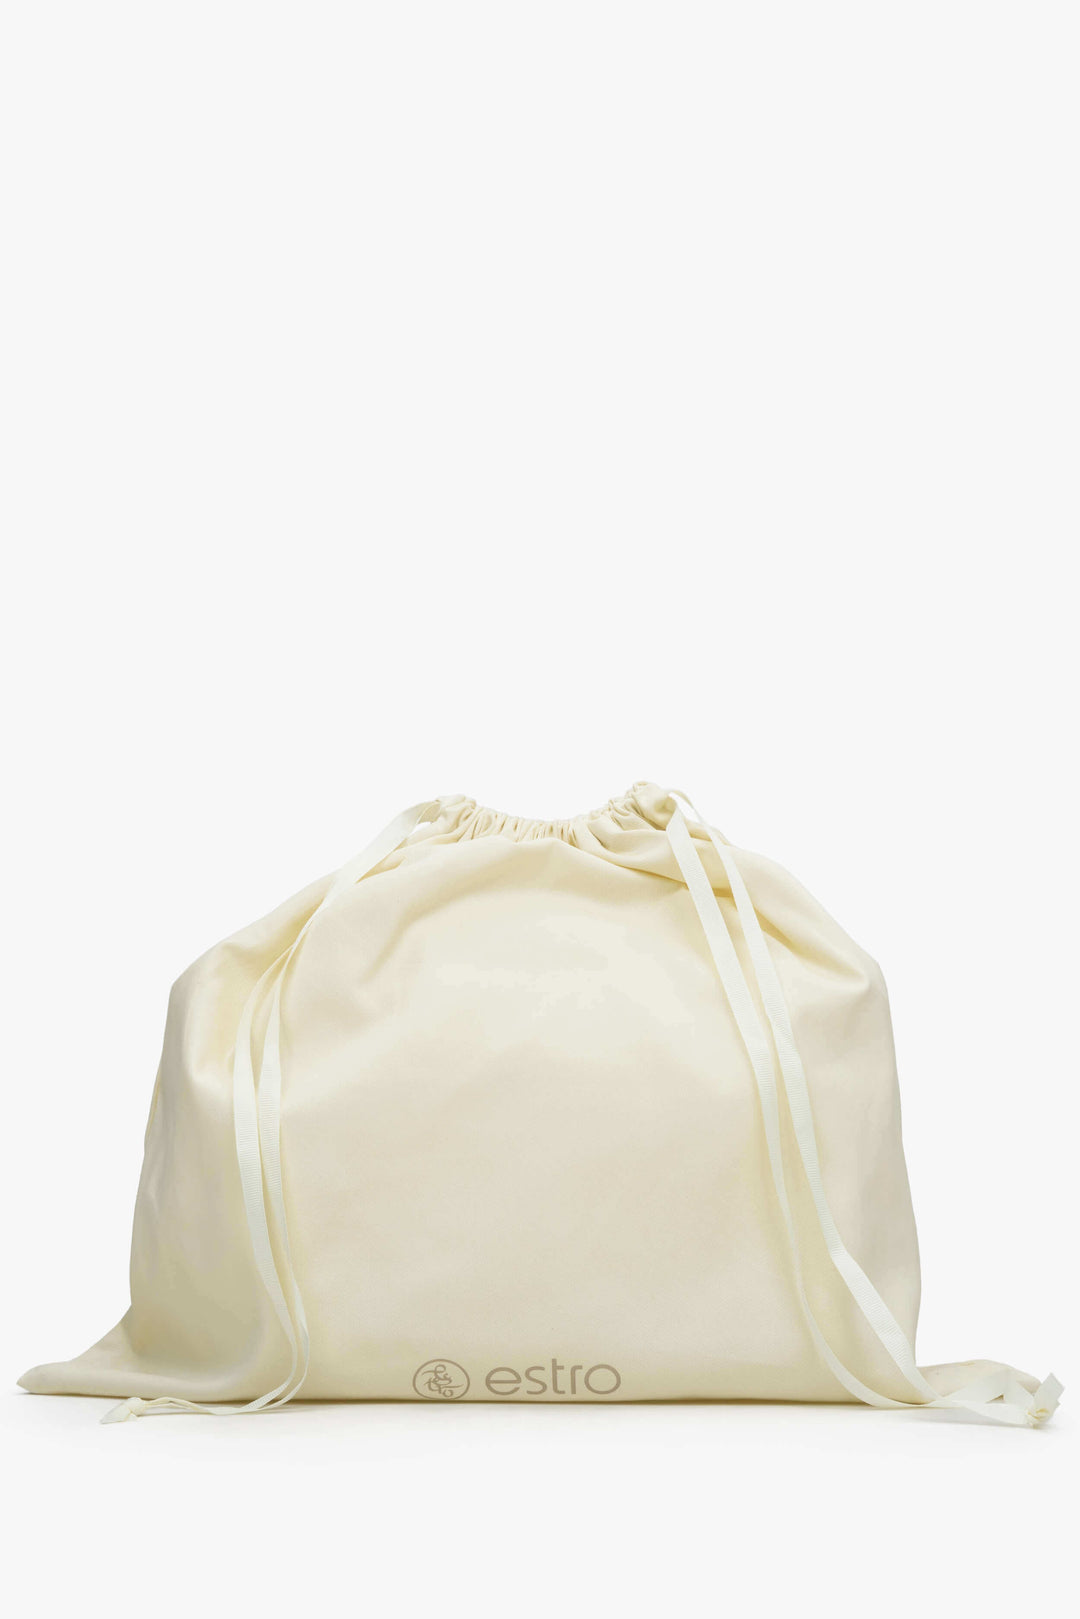 Women's White Chain Strap Shoulder Bag with Silver Accents Estro ER00114429